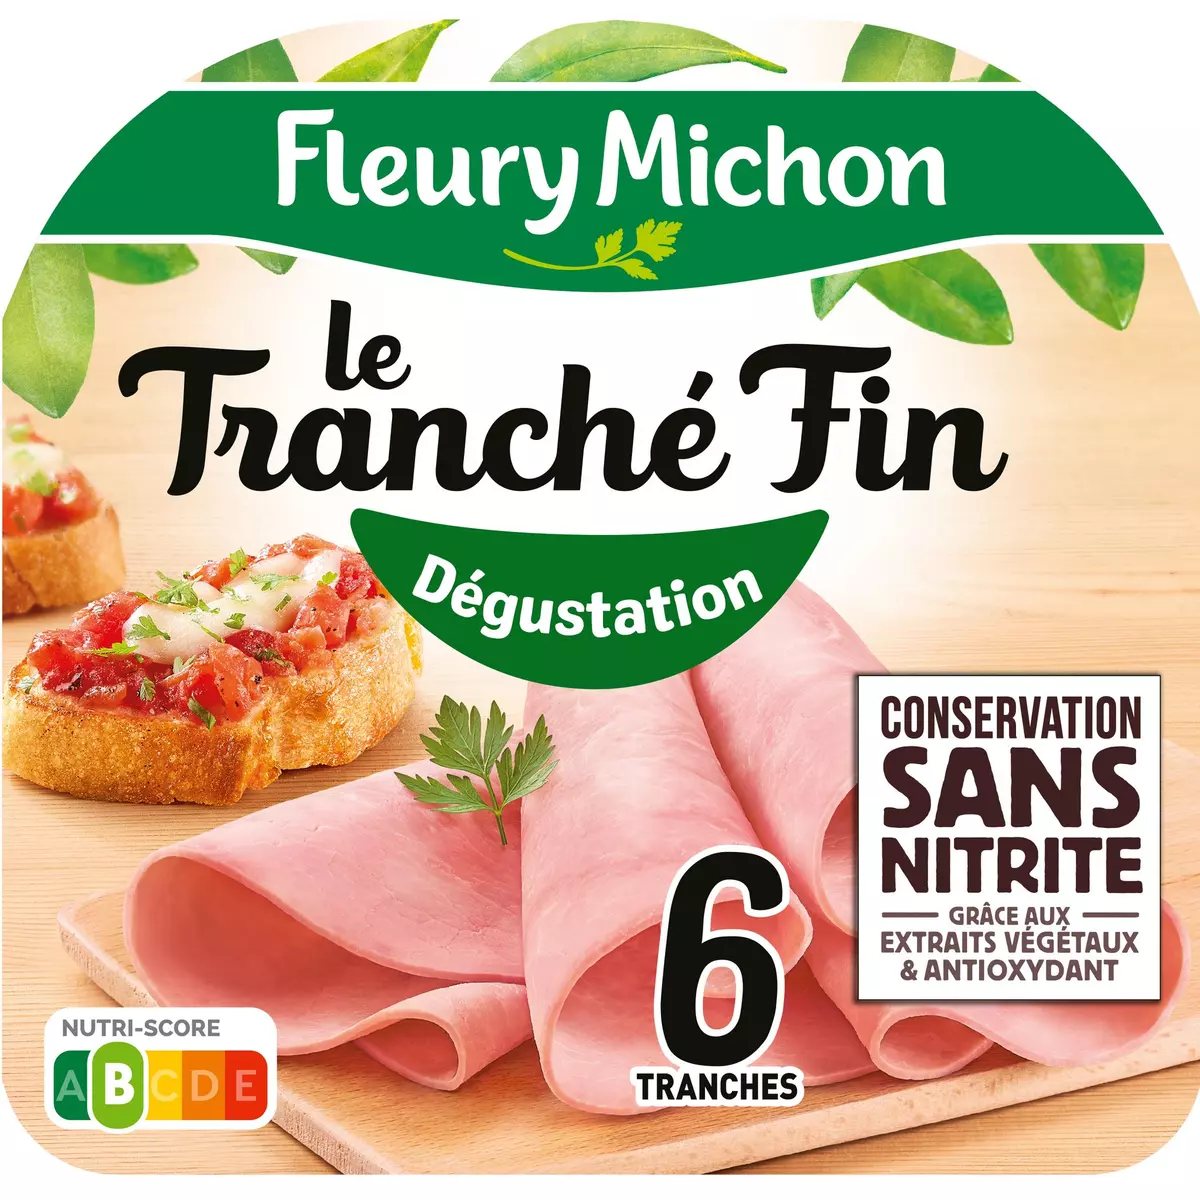 FLEURY MICHON Jambon tranché fin dégustation sans nitrite 6 tranches 180g